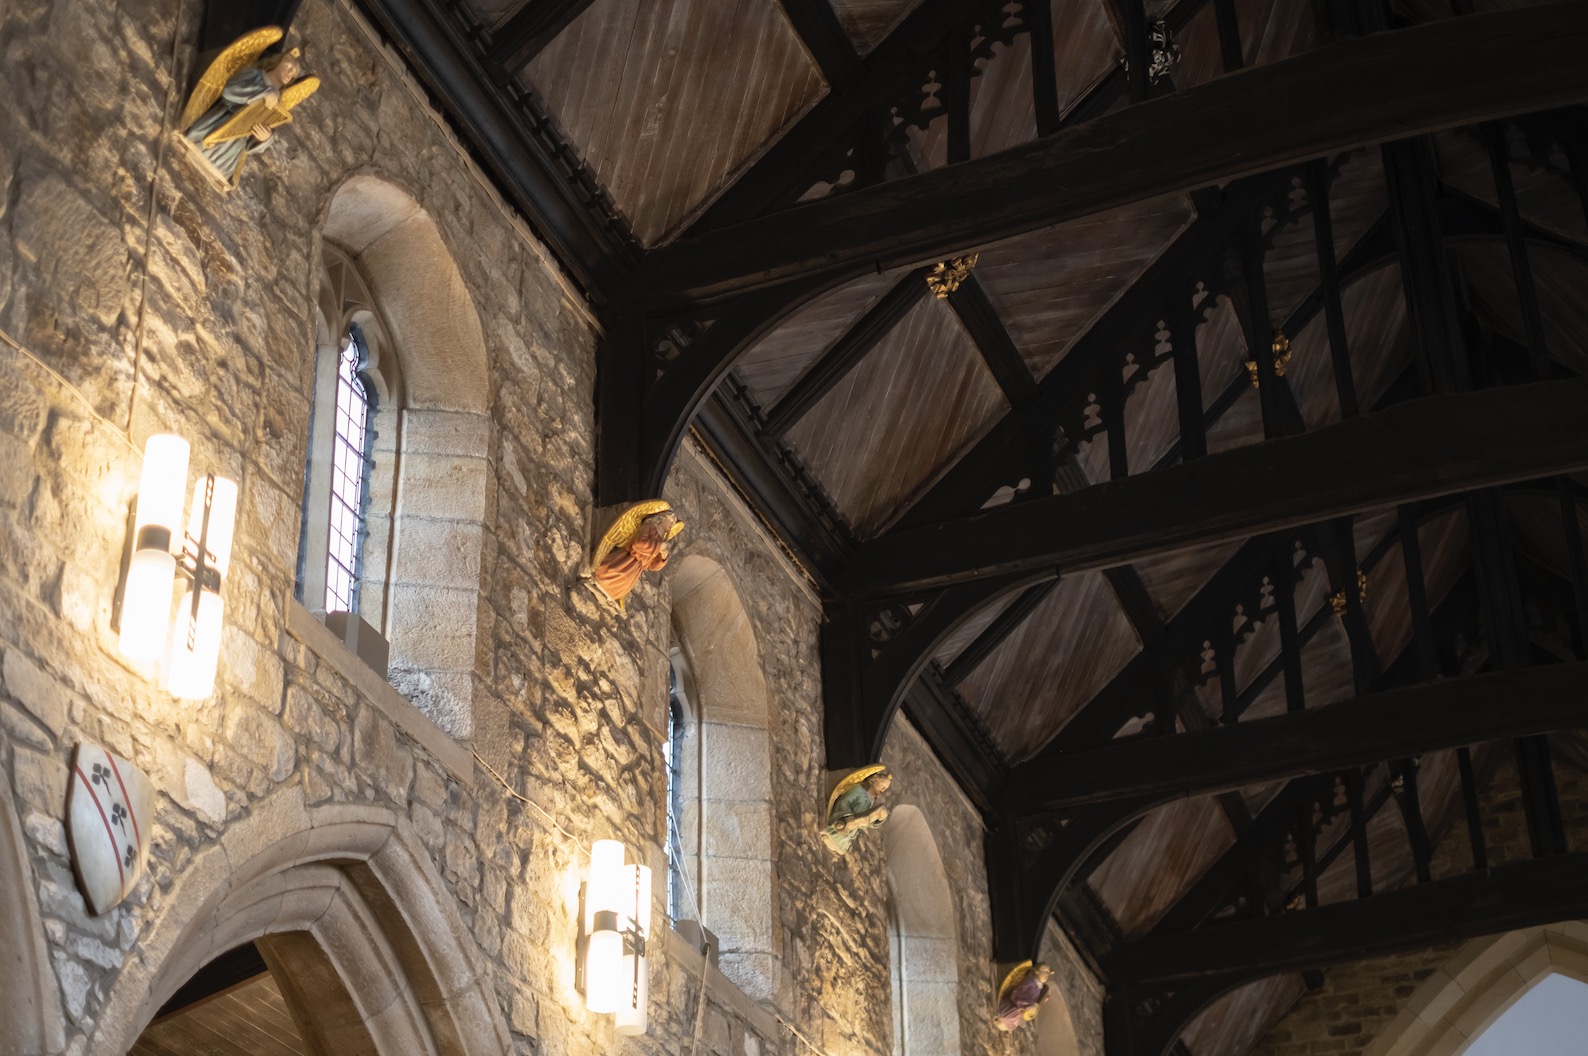 Bradford Cathedral Ceiling - Always Look Up